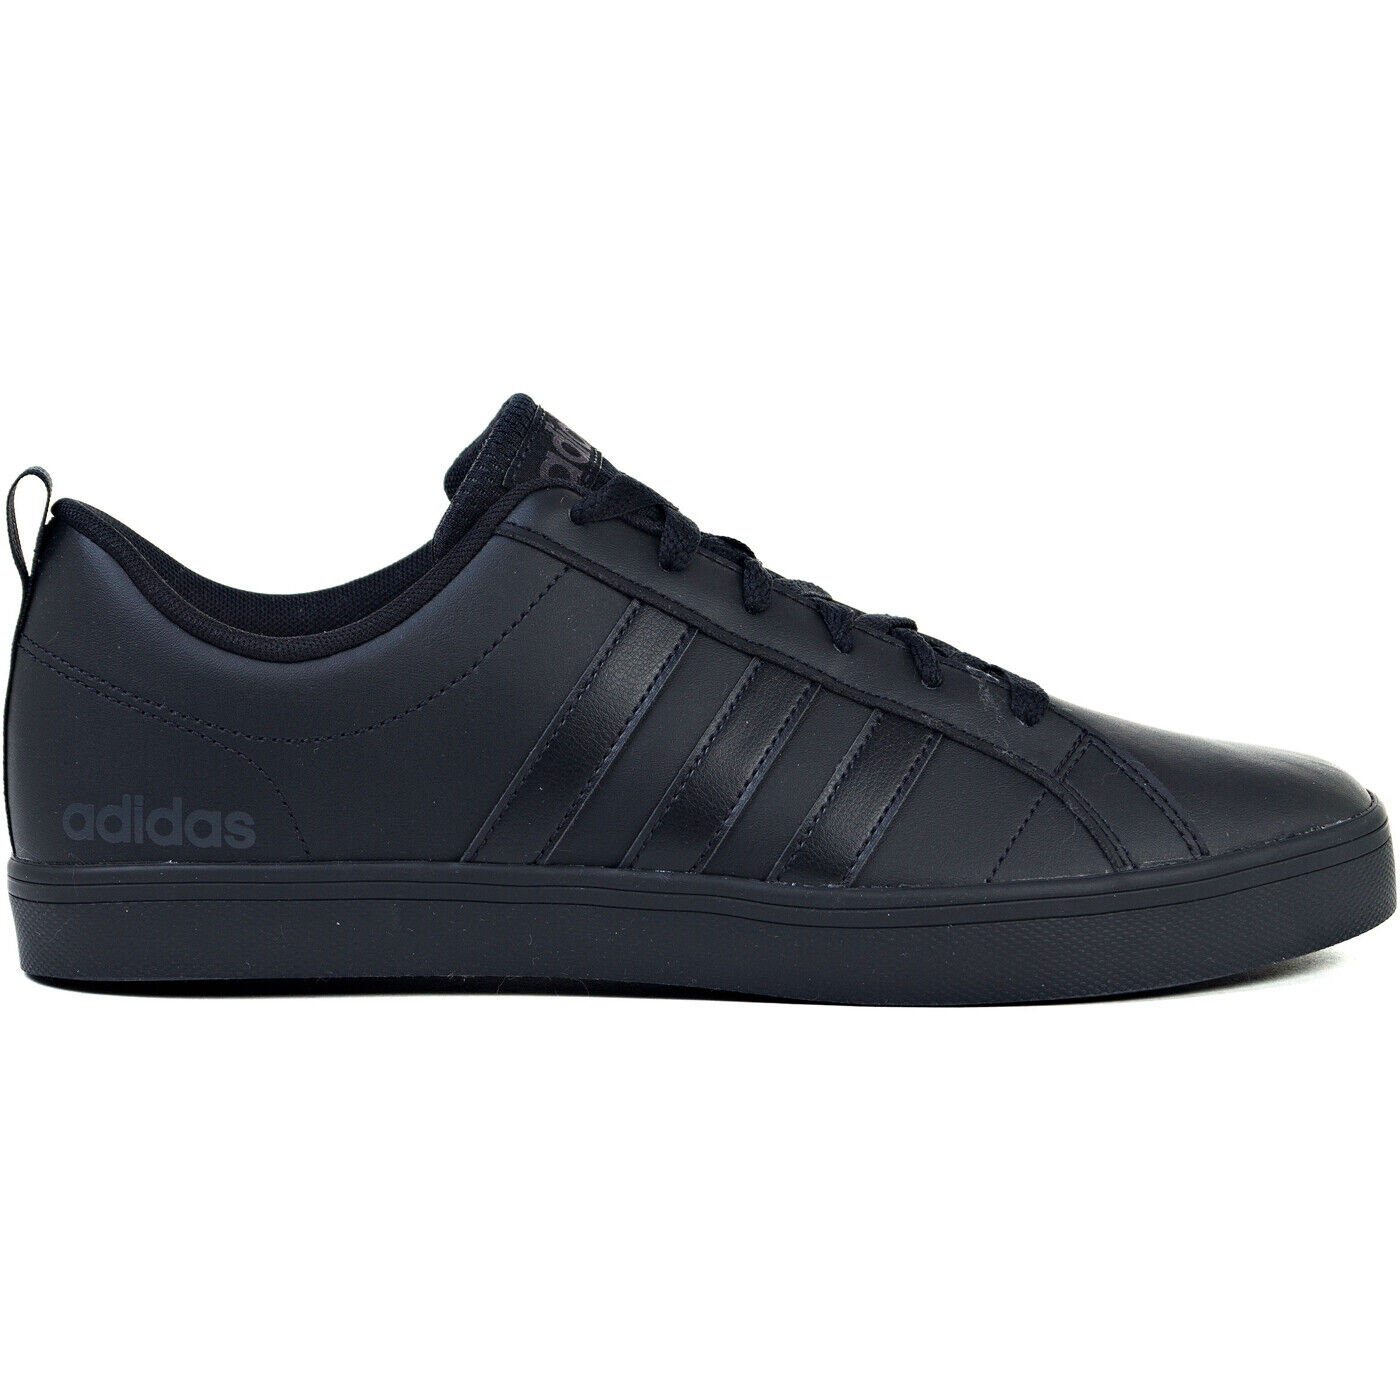 pauze Laatste humor adidas VS Pace Men's Lifestyle Shoes Comfort Sneakers Easy Low-Top Style  B44869 | eBay